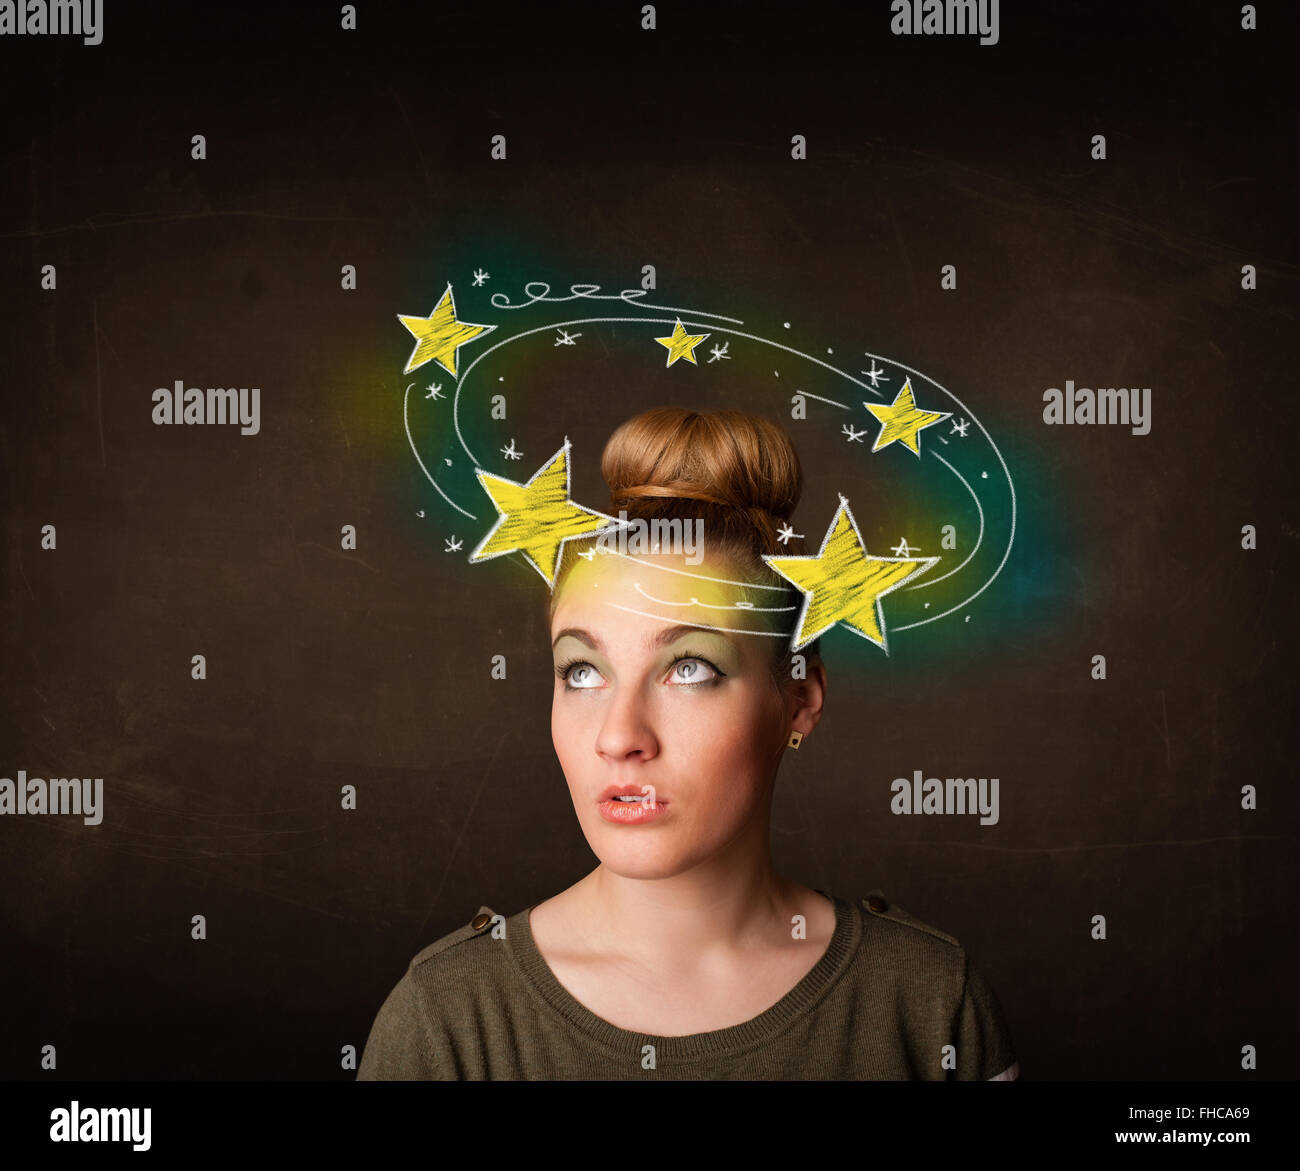 girl with yellow stars circleing around her head illustration Stock Photo